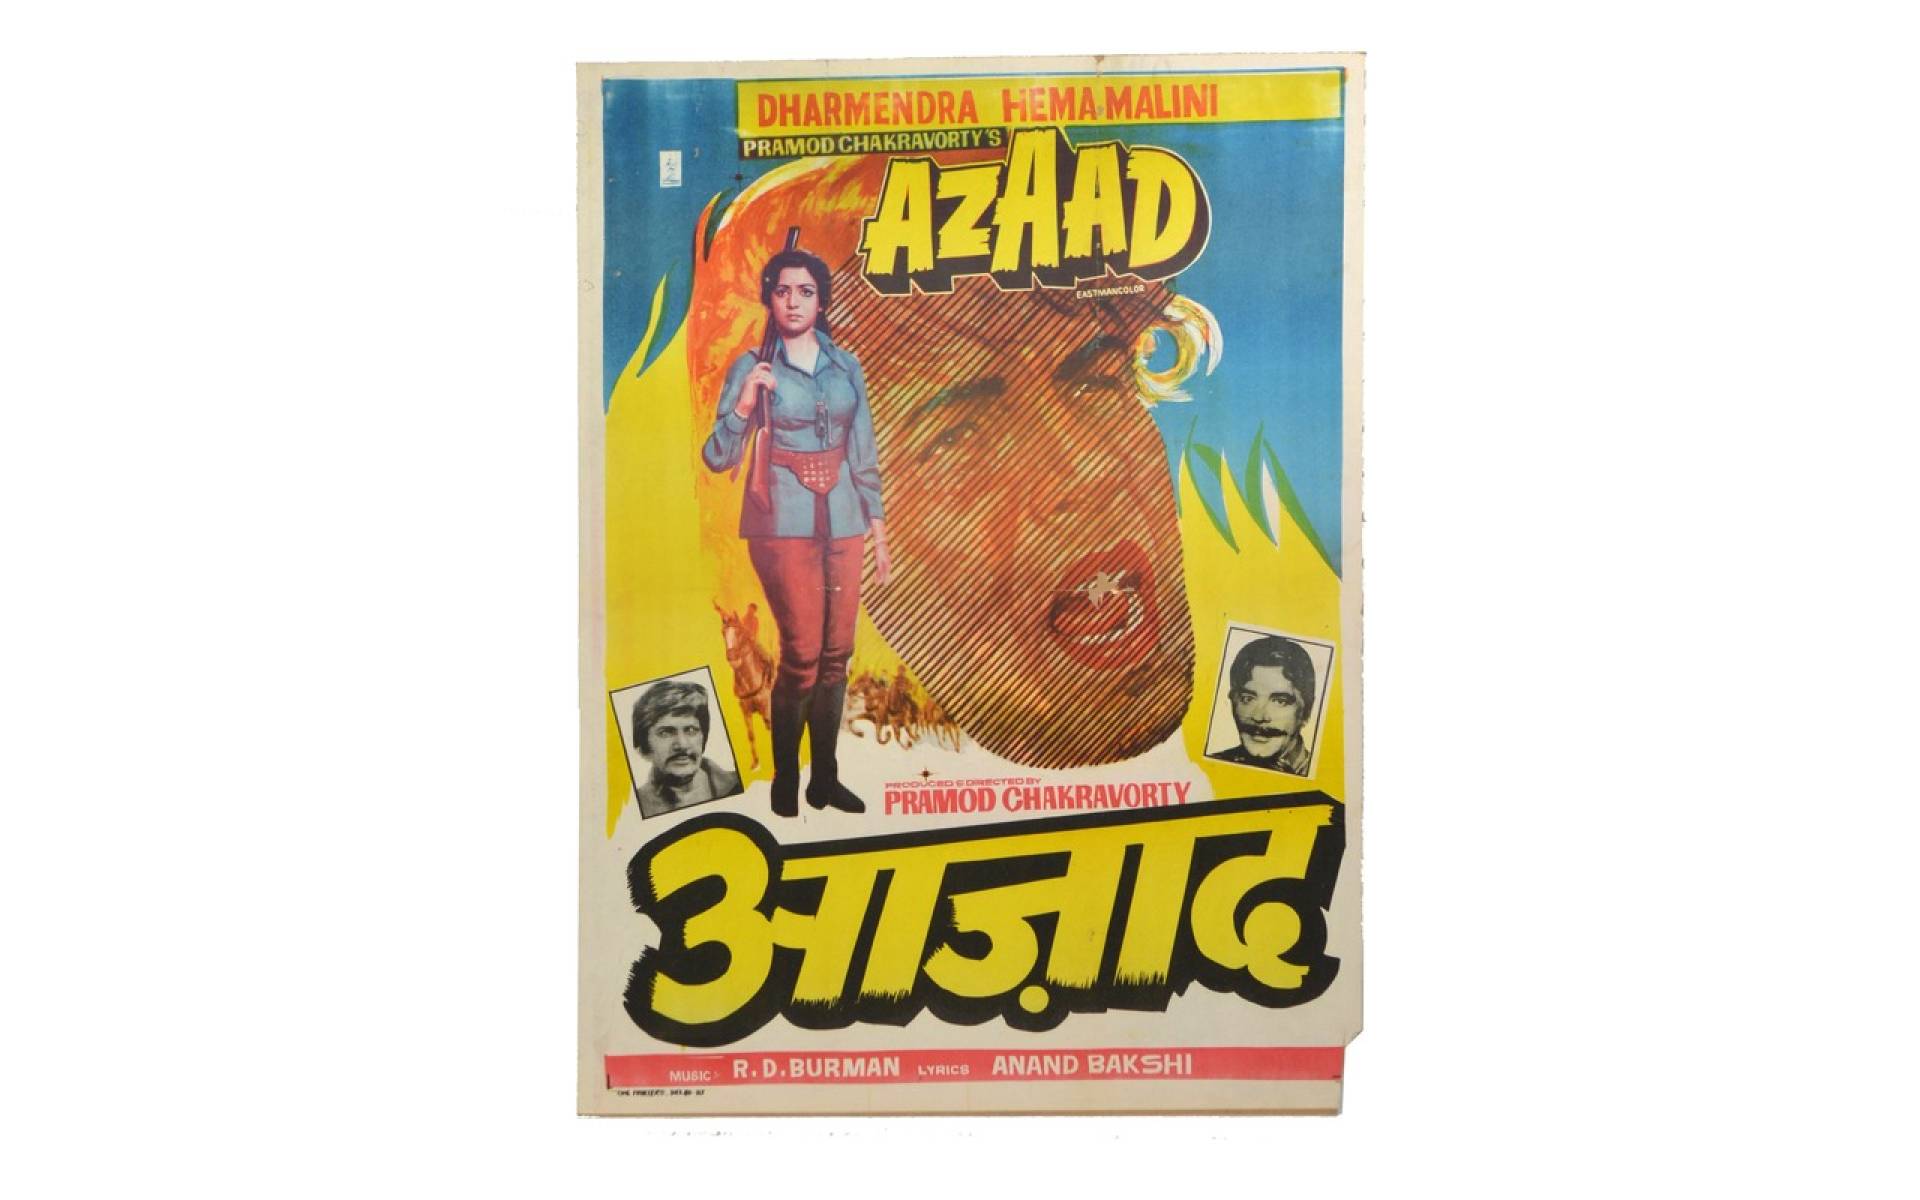 Antik filmový plagát Bollywood, cca 100x75cm